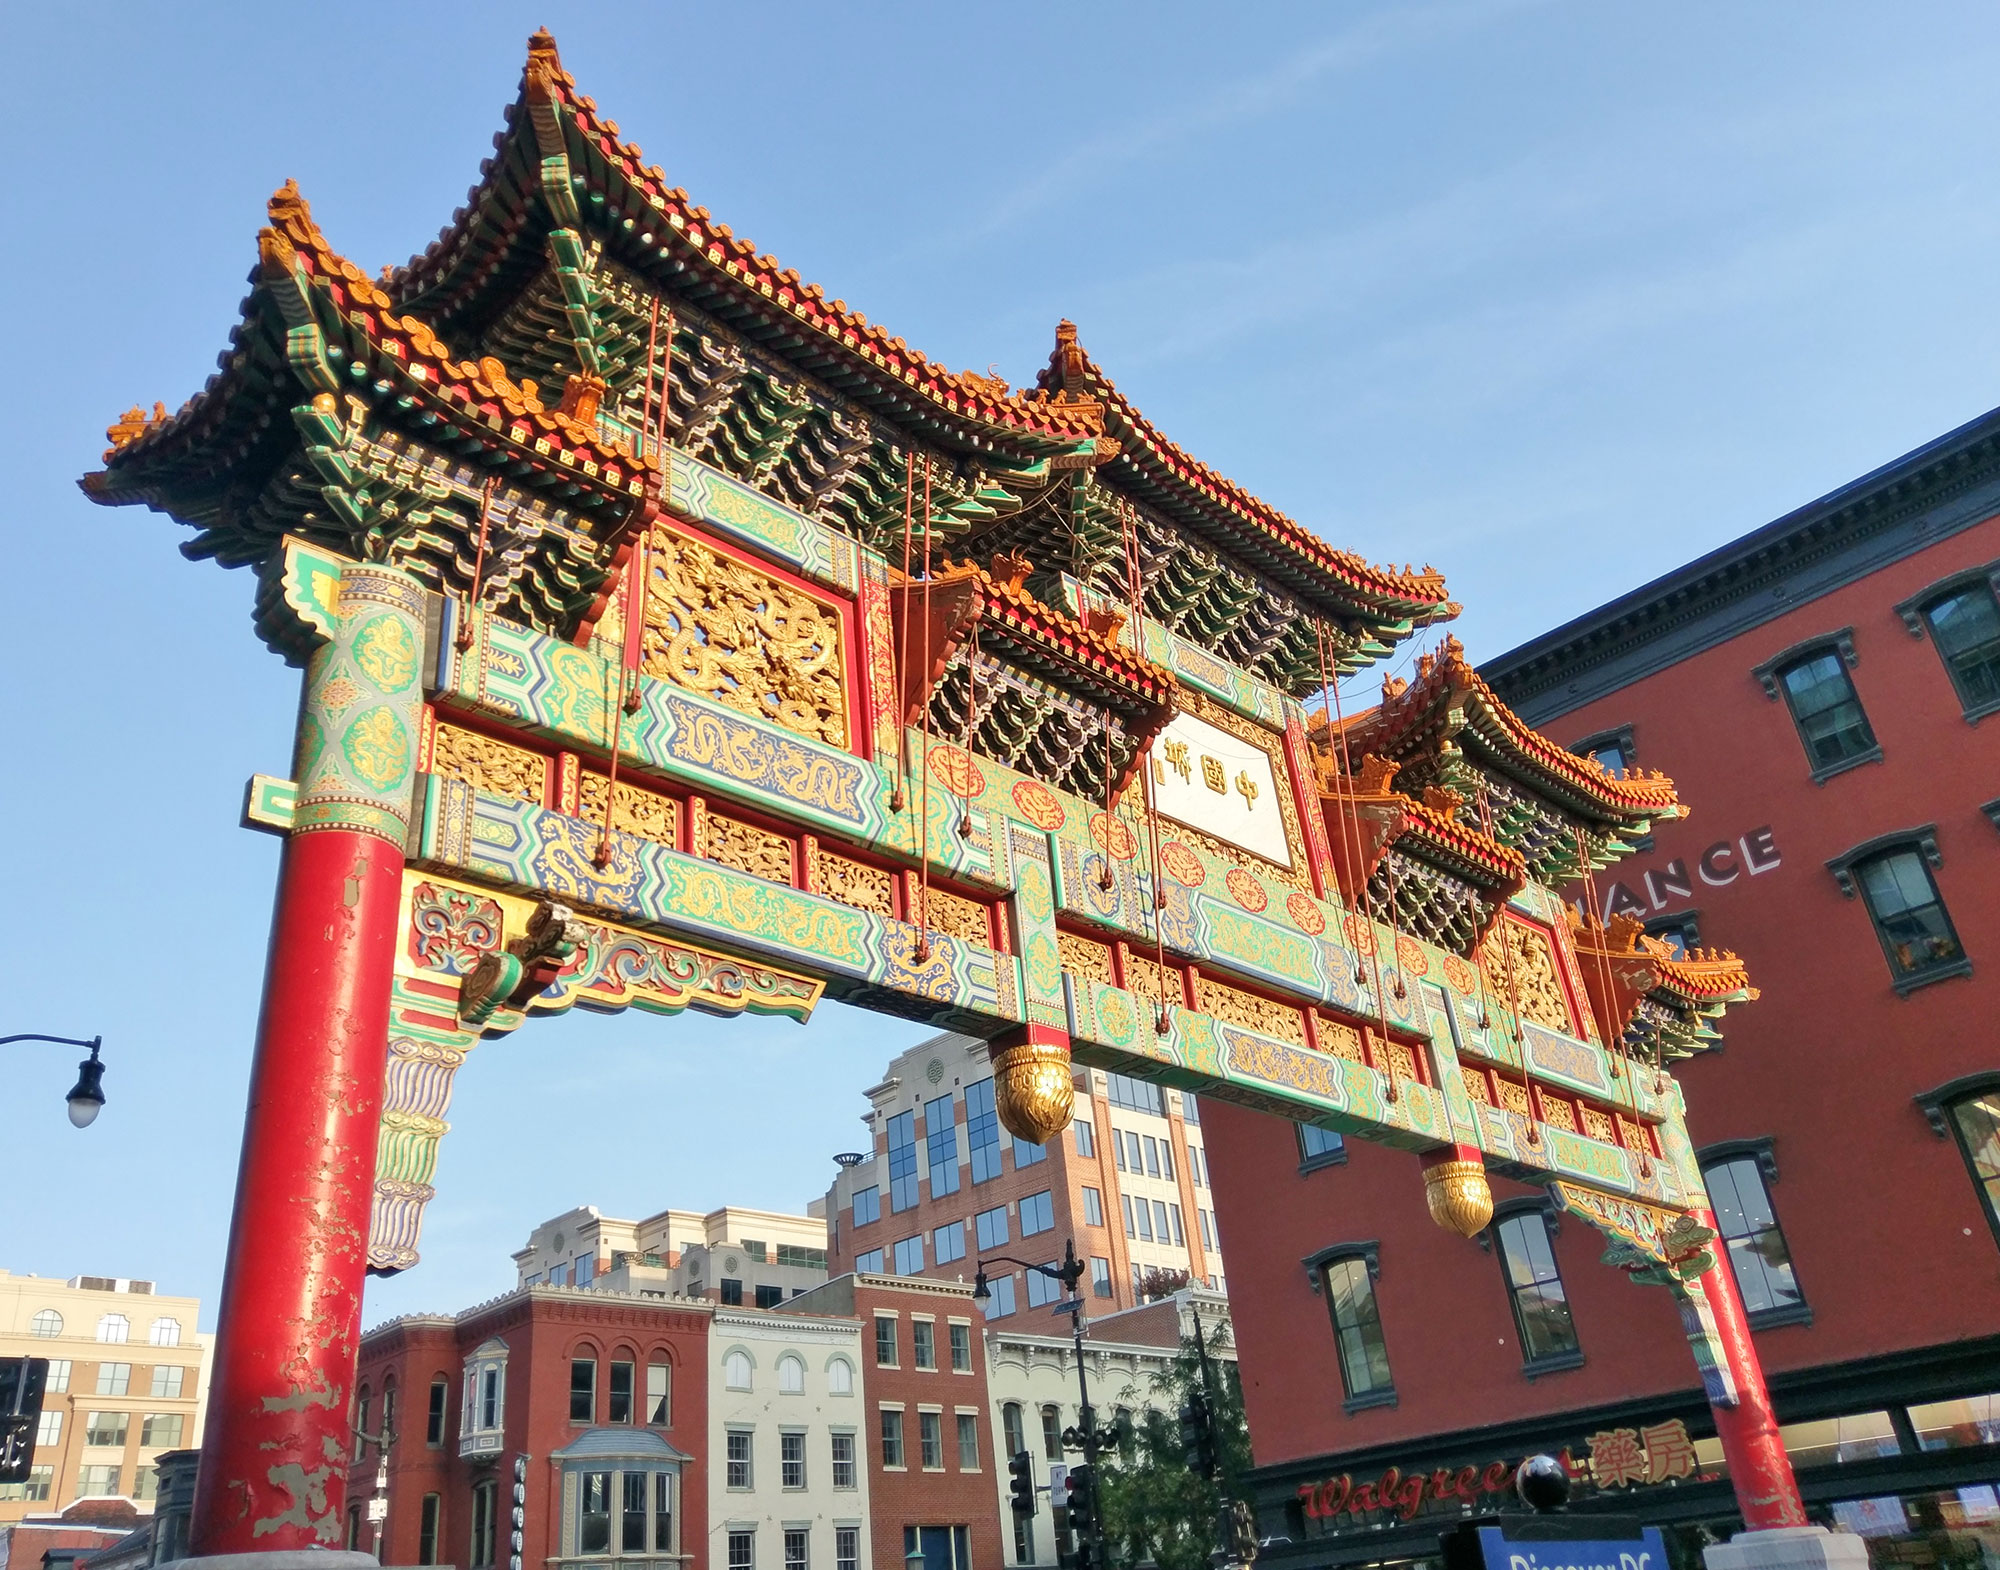 The Friendship archway in Chinatown, Washington D.C.